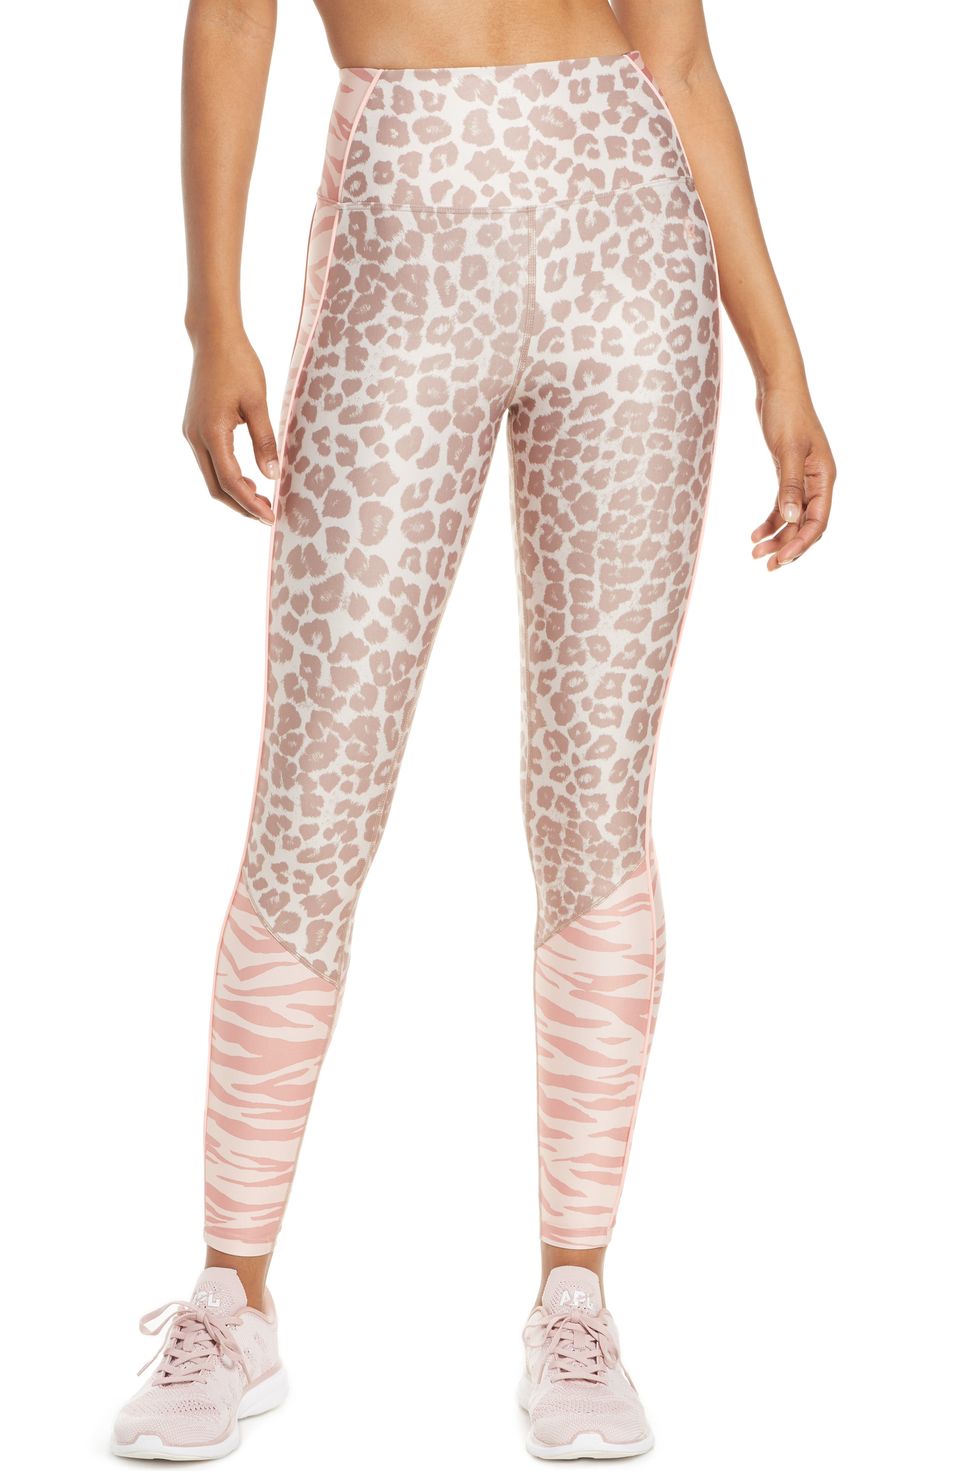 Buy Active Pink Leopard Print Leggings 16, Leggings